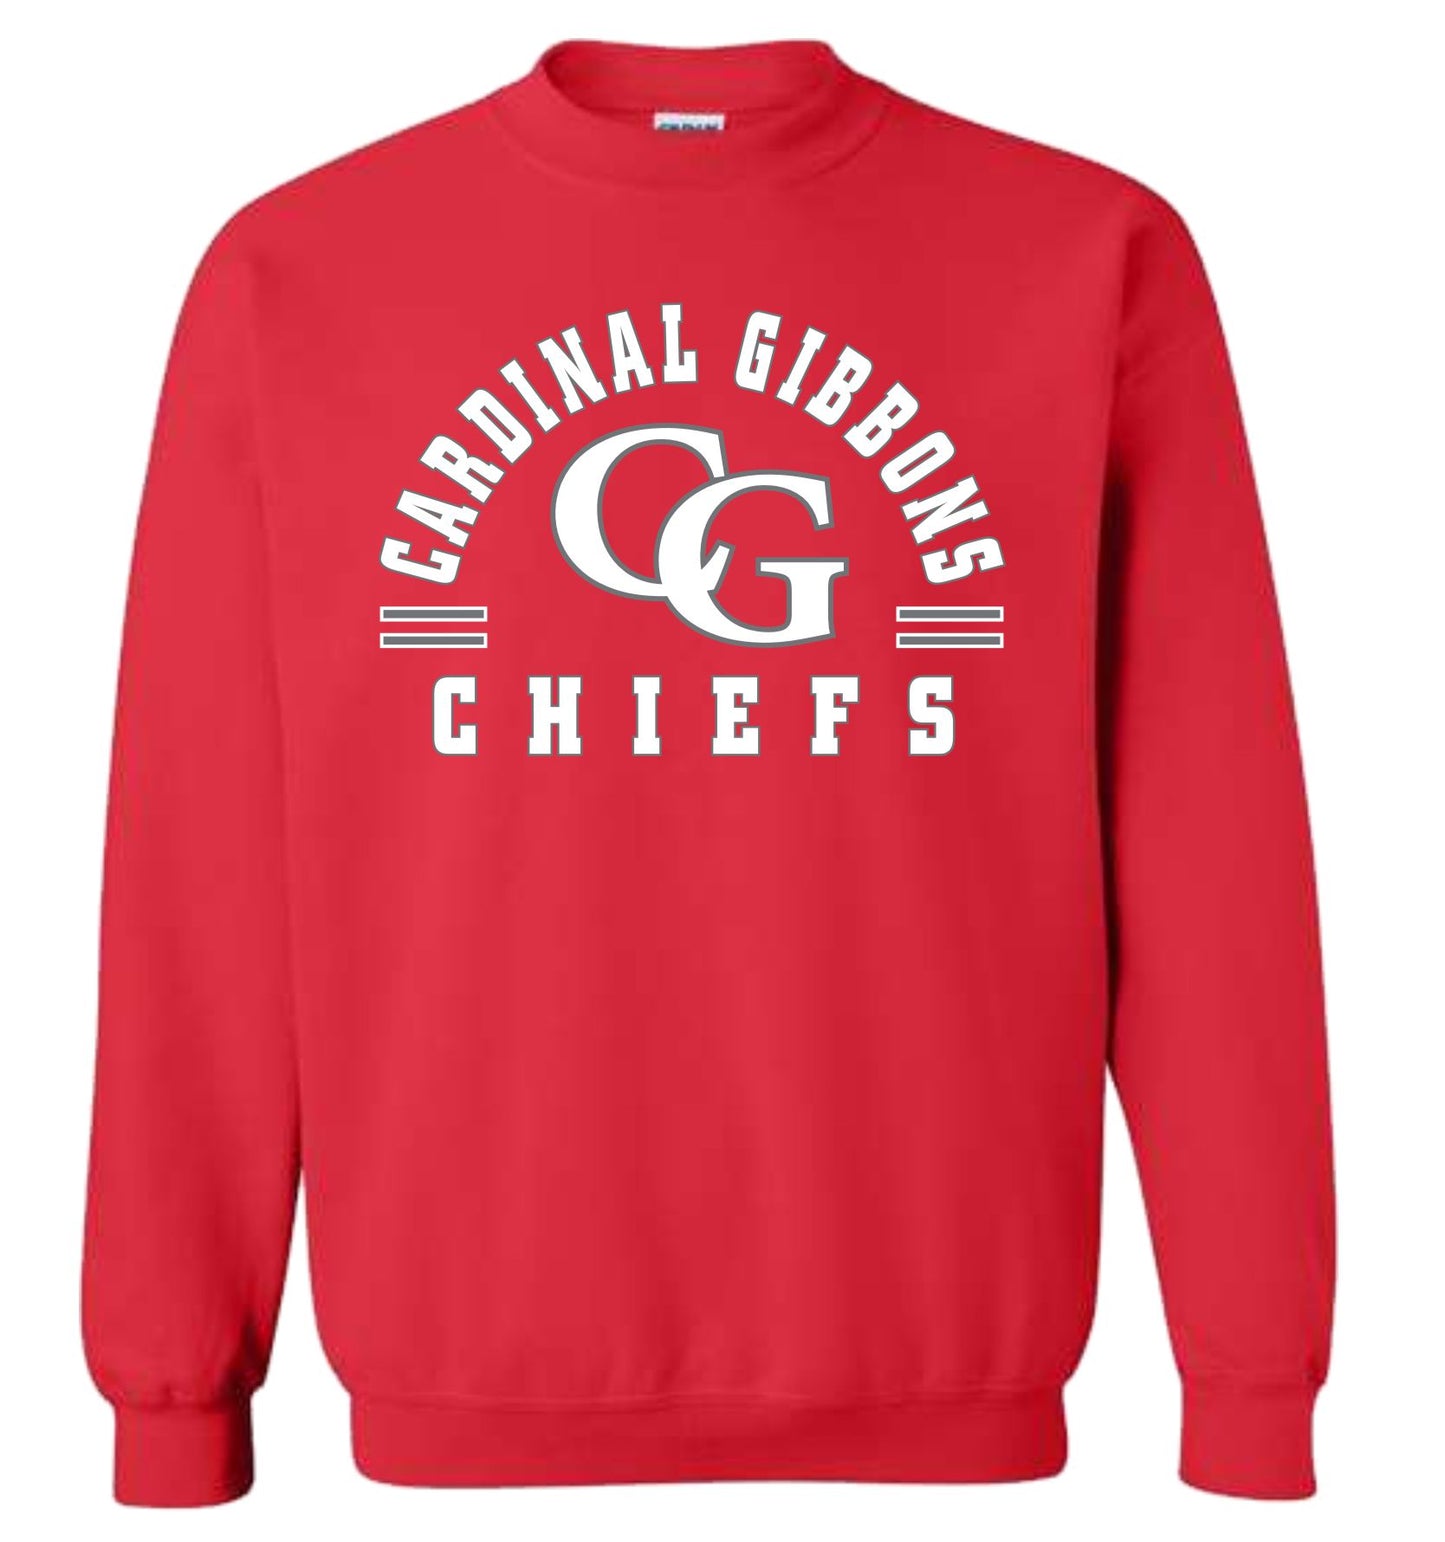 Gildan Red CG Crewneck Sweatshirt